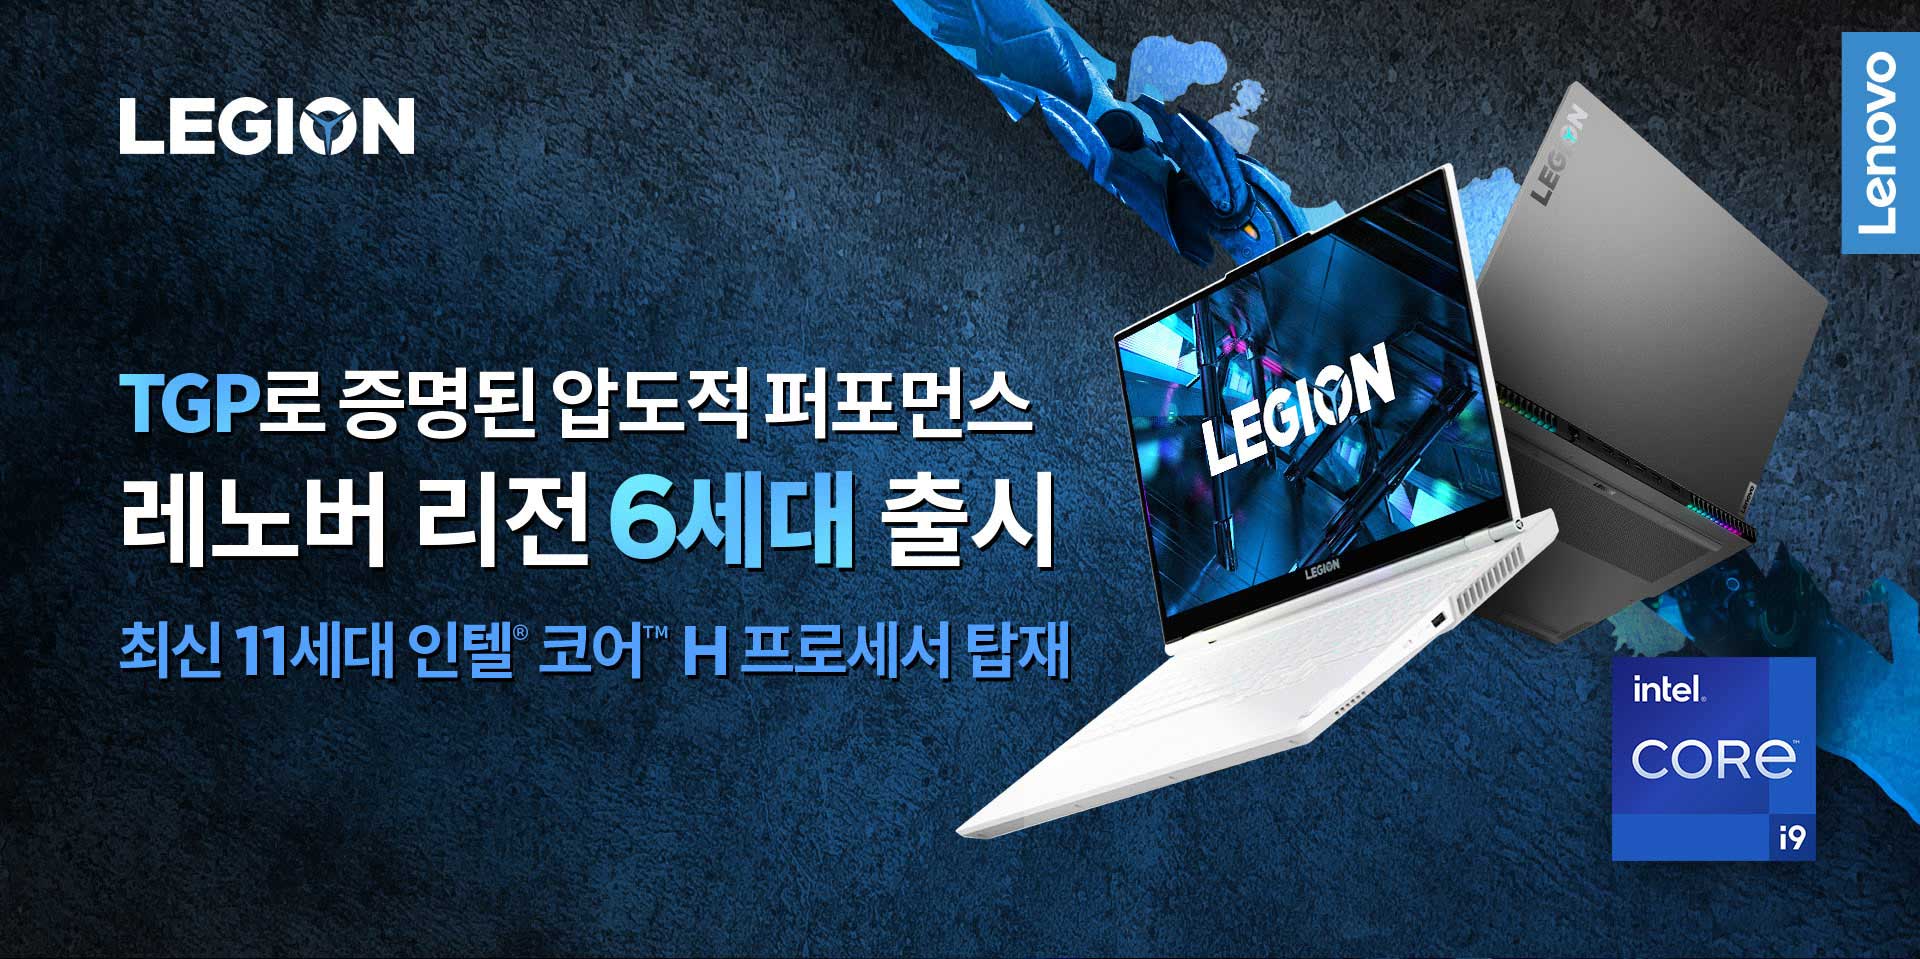 Legion | Lenovo 코리아